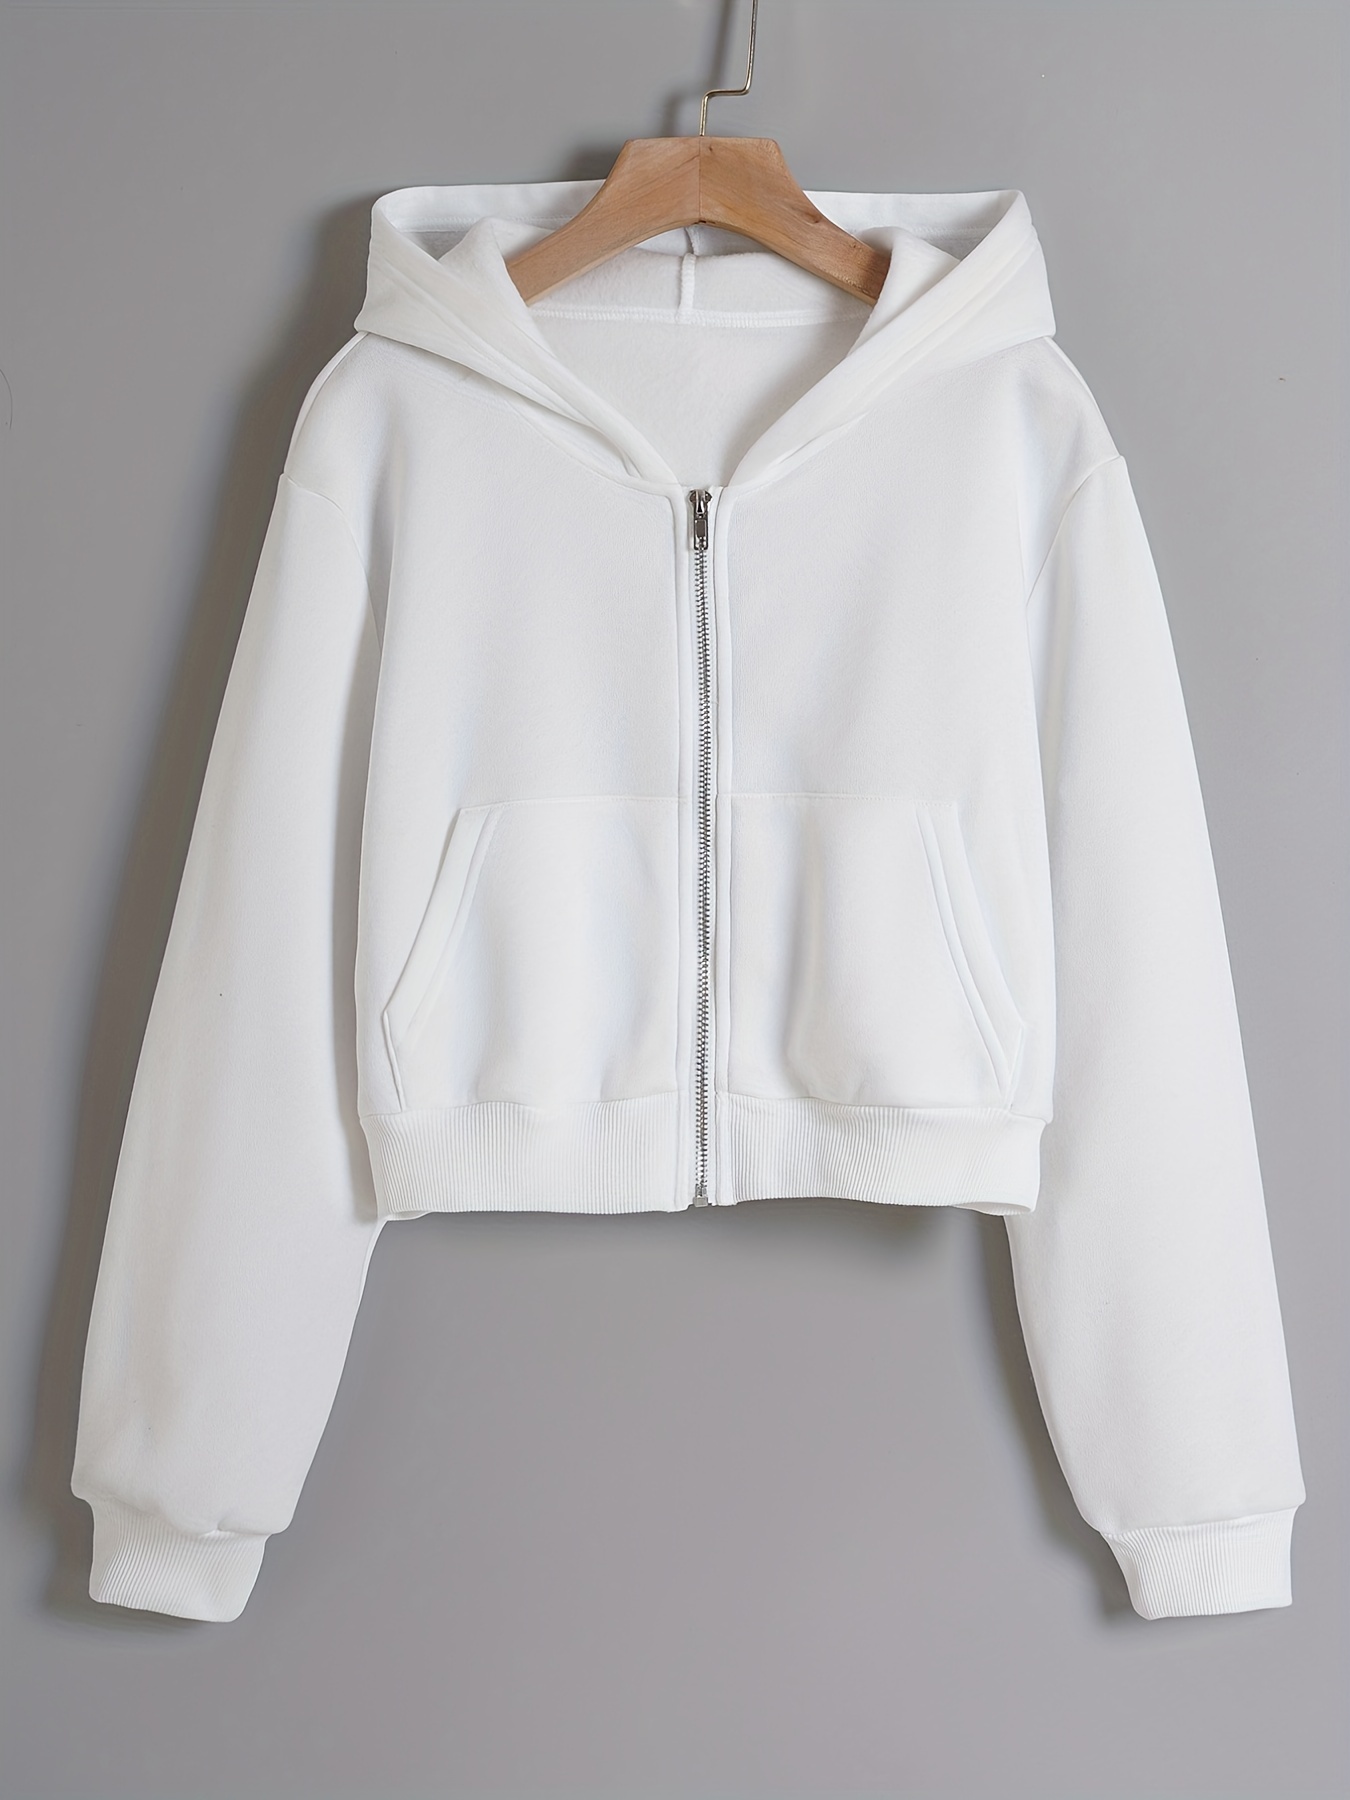 Long Sleeve Crop Hoodies, Zip Up Casual Sweatshirt Jacket, Women's Clothing